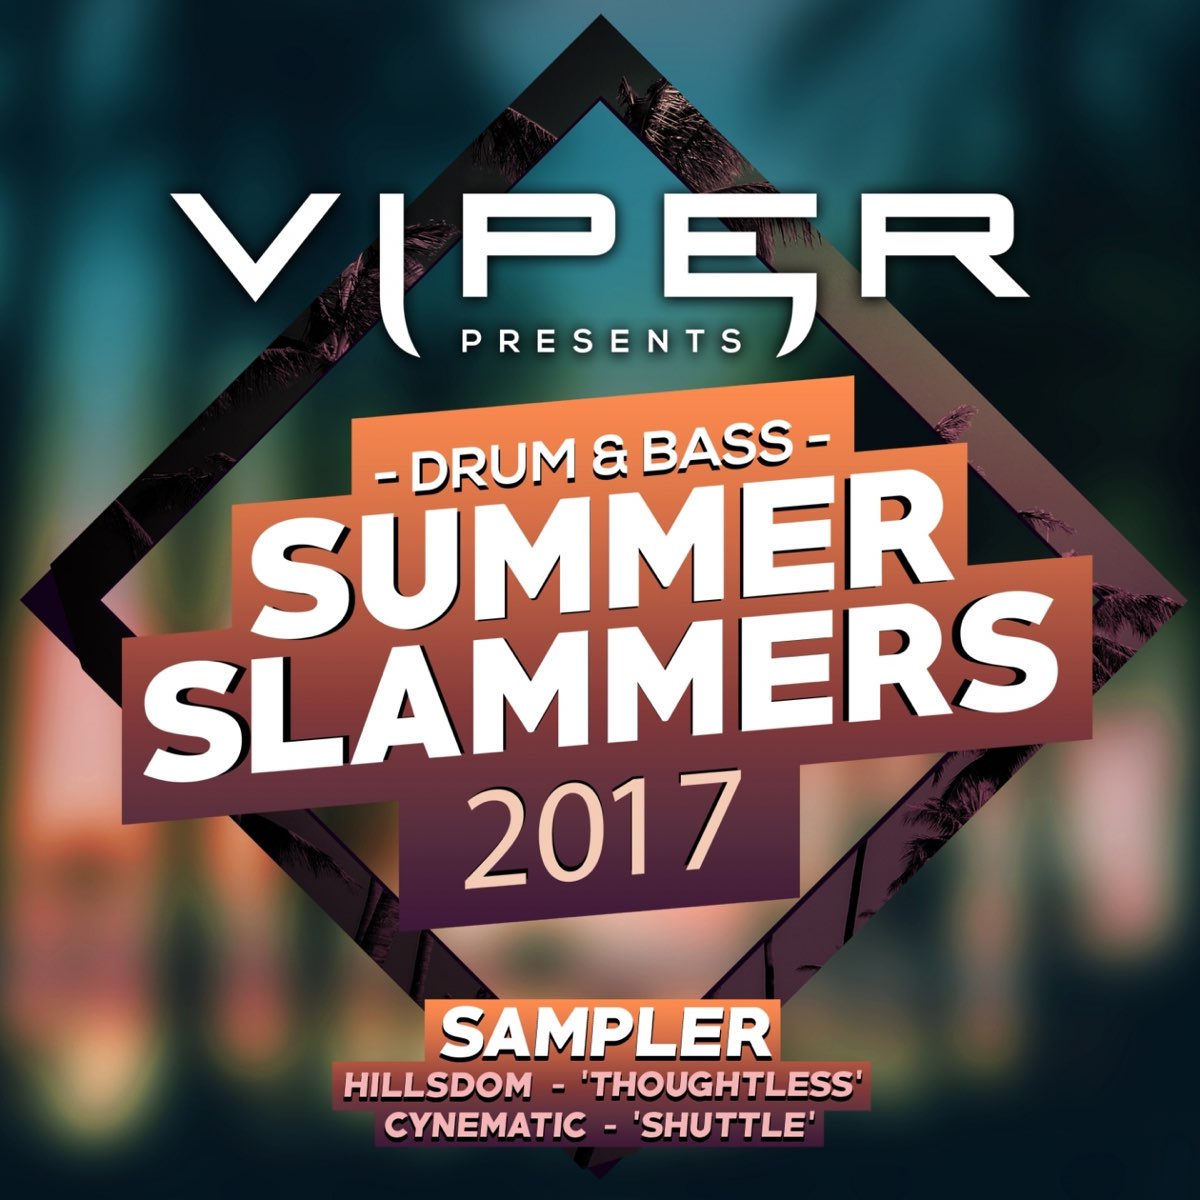 Drum and Bass Summer. Ram Drum & Bass Annual 2012. Viper Annual 2019. Ram Drum & Bass Annual 2015. Summer bass